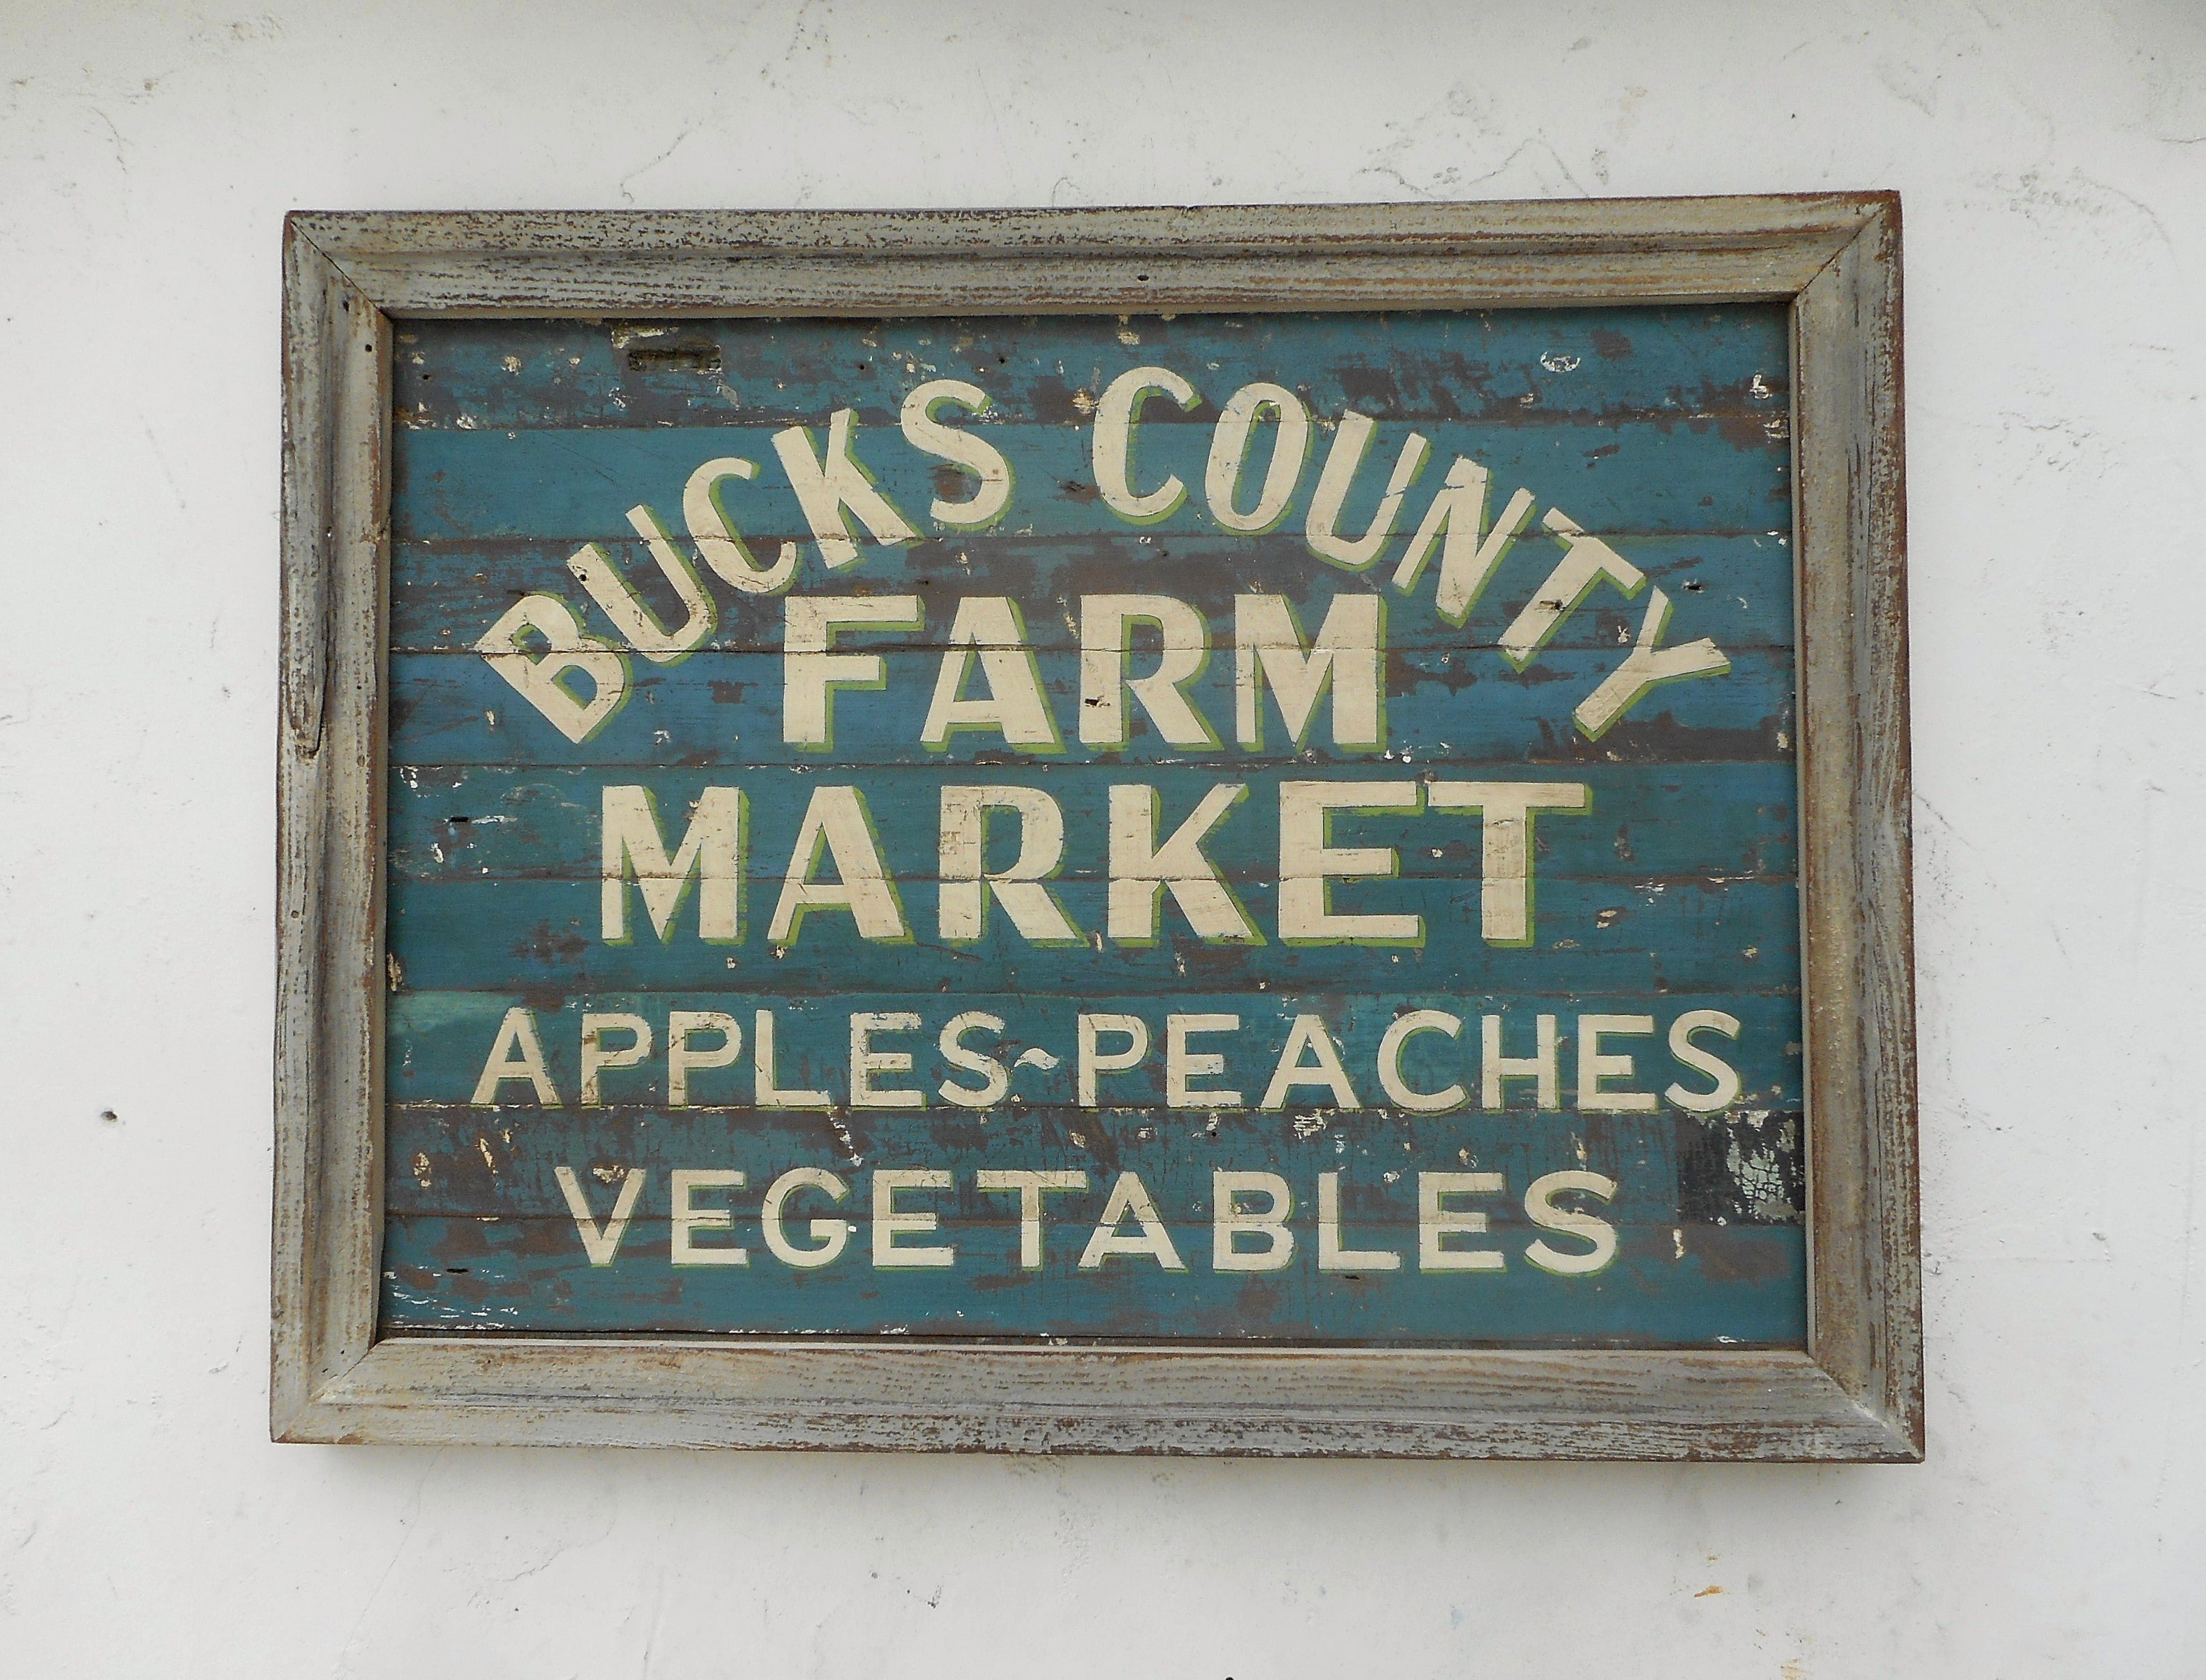 Bucks County Farm Market